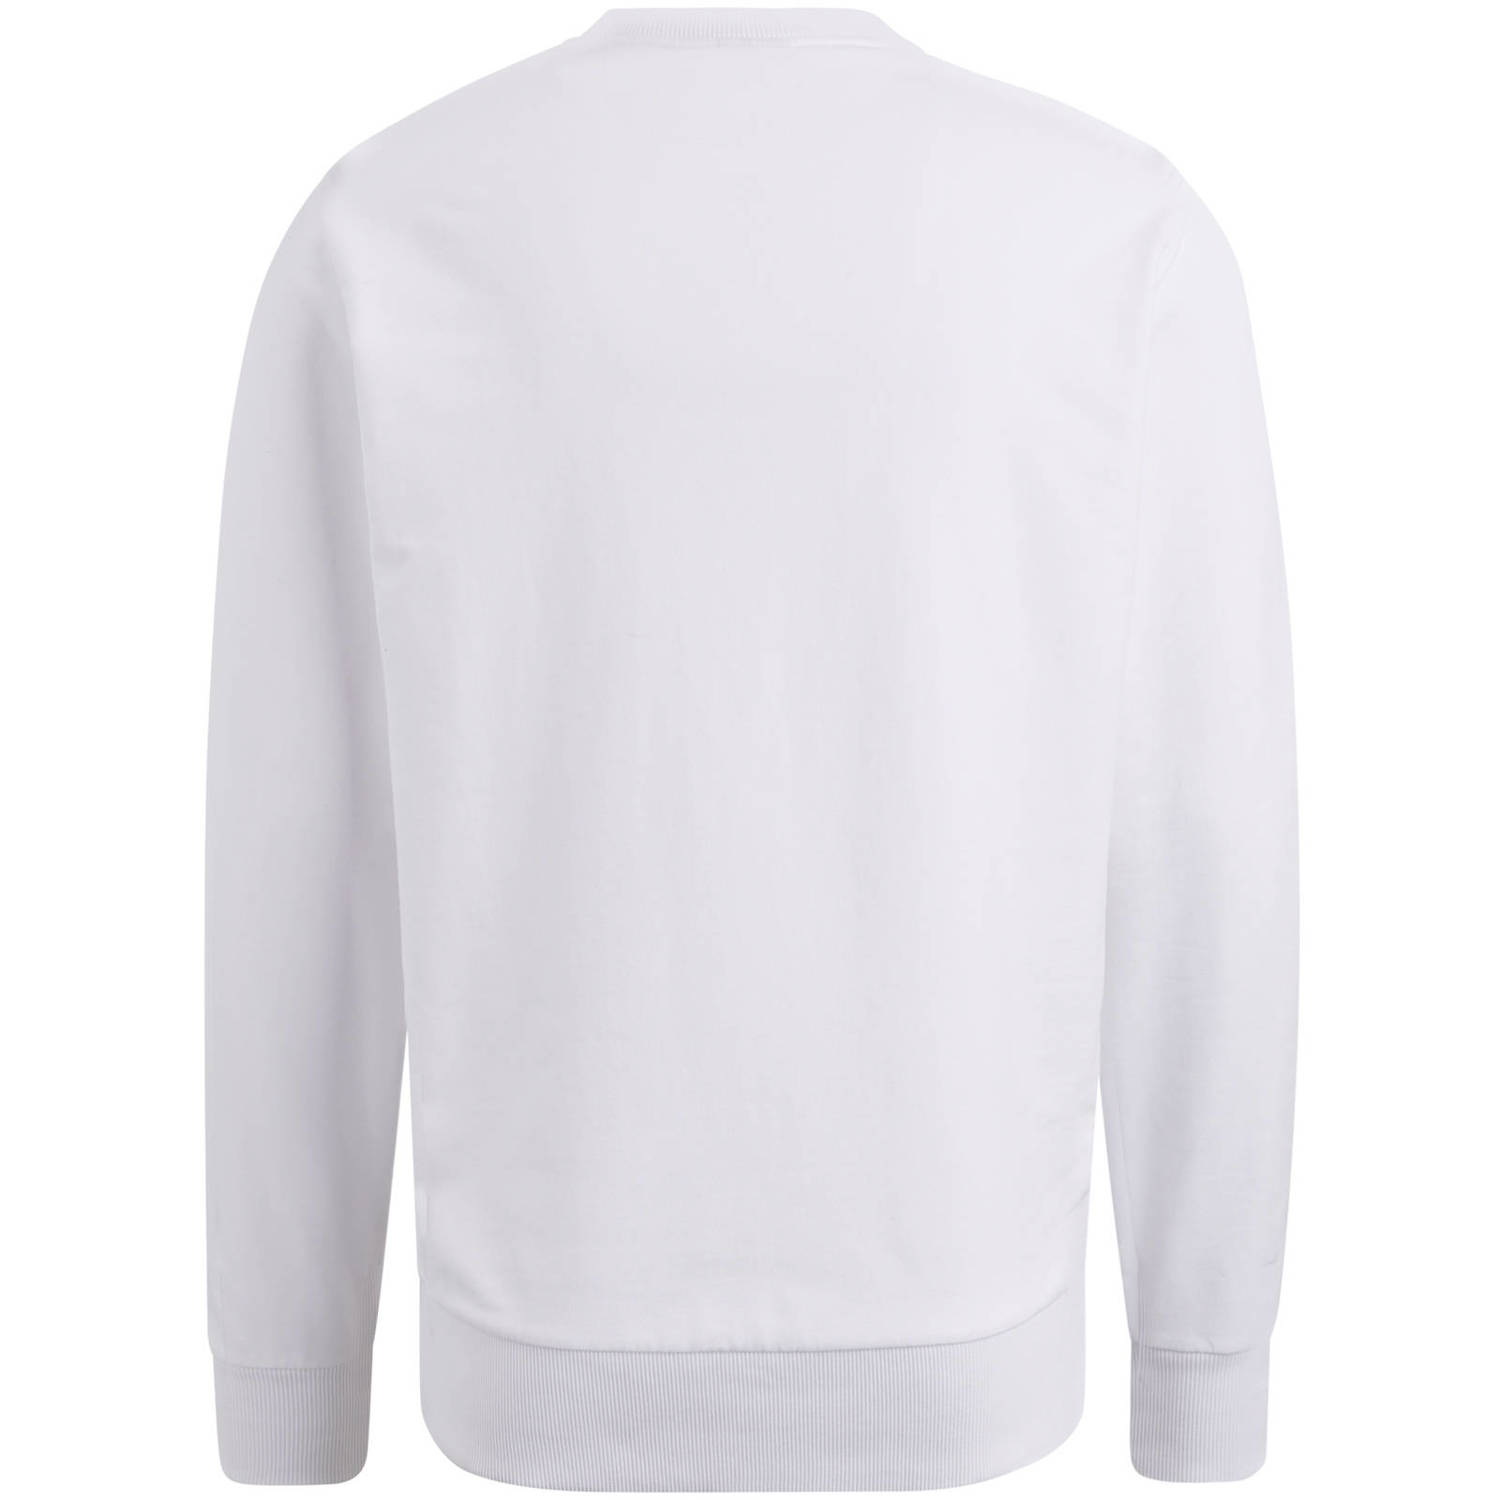 PME Legend sweater met printopdruk wit